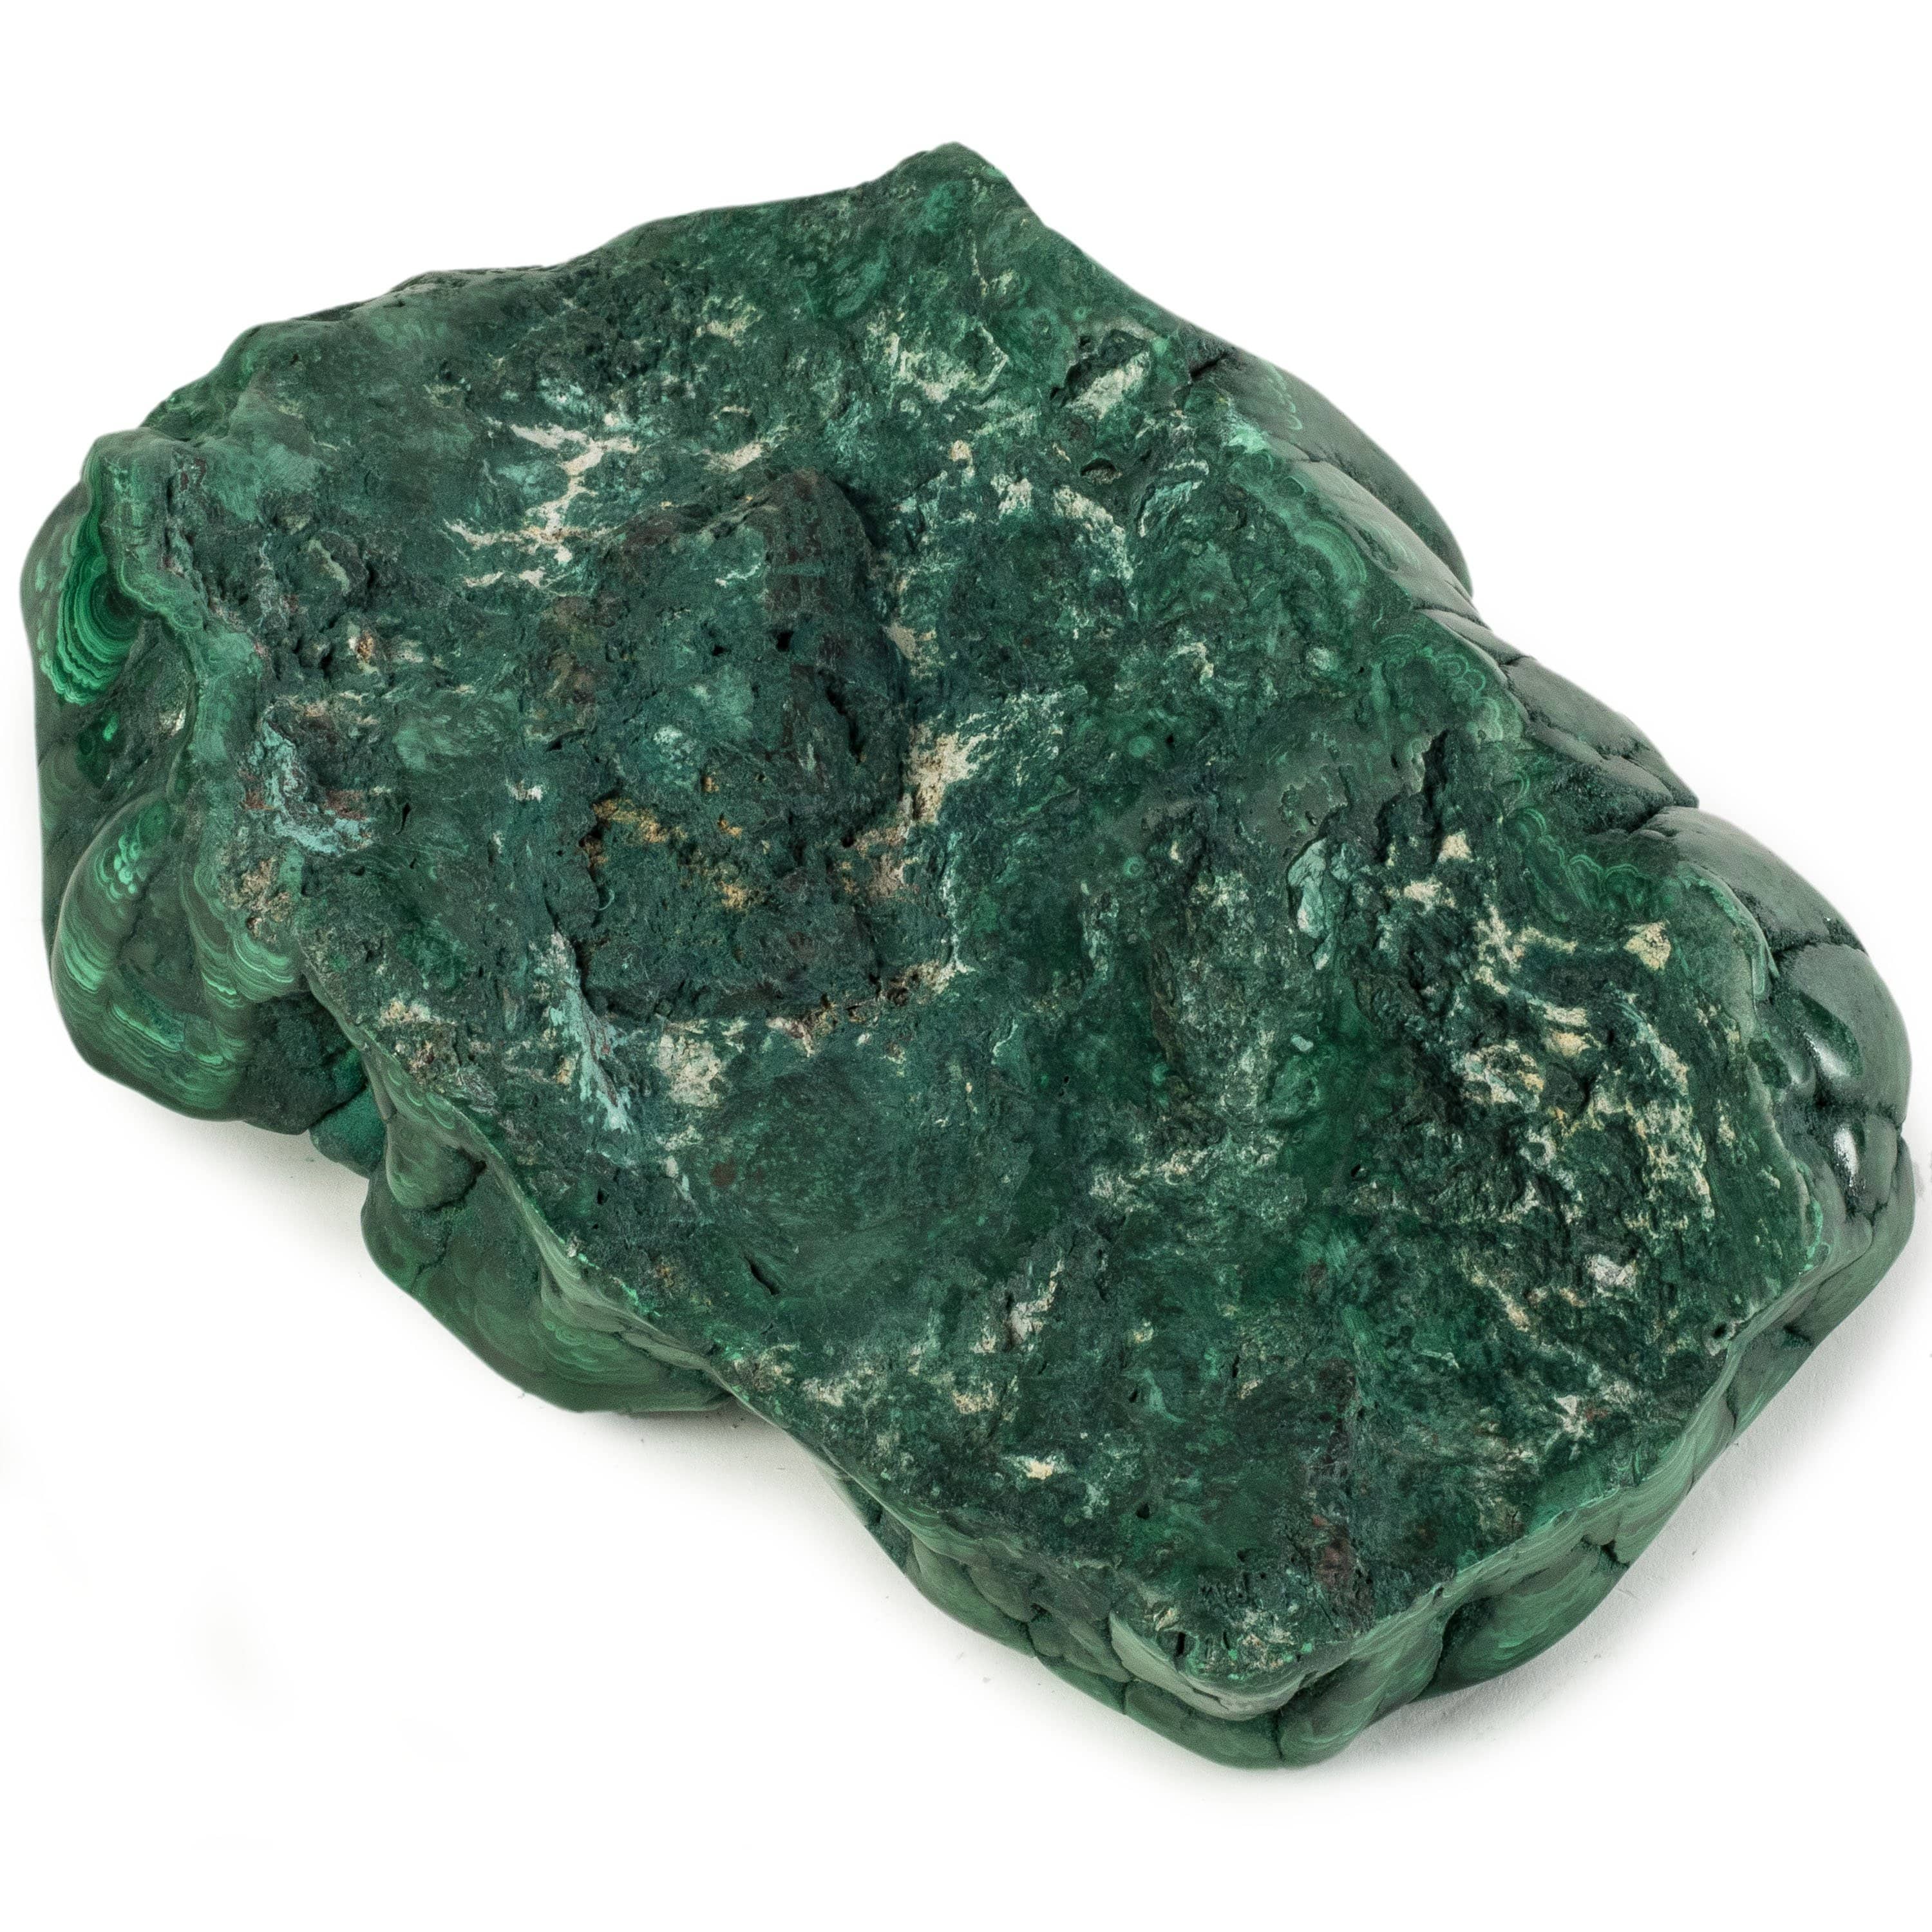 Kalifano Malachite Rare Natural Green Malachite Polished Freeform Specimen from Congo - 5.9 kg / 13.1 lbs MA3800.001